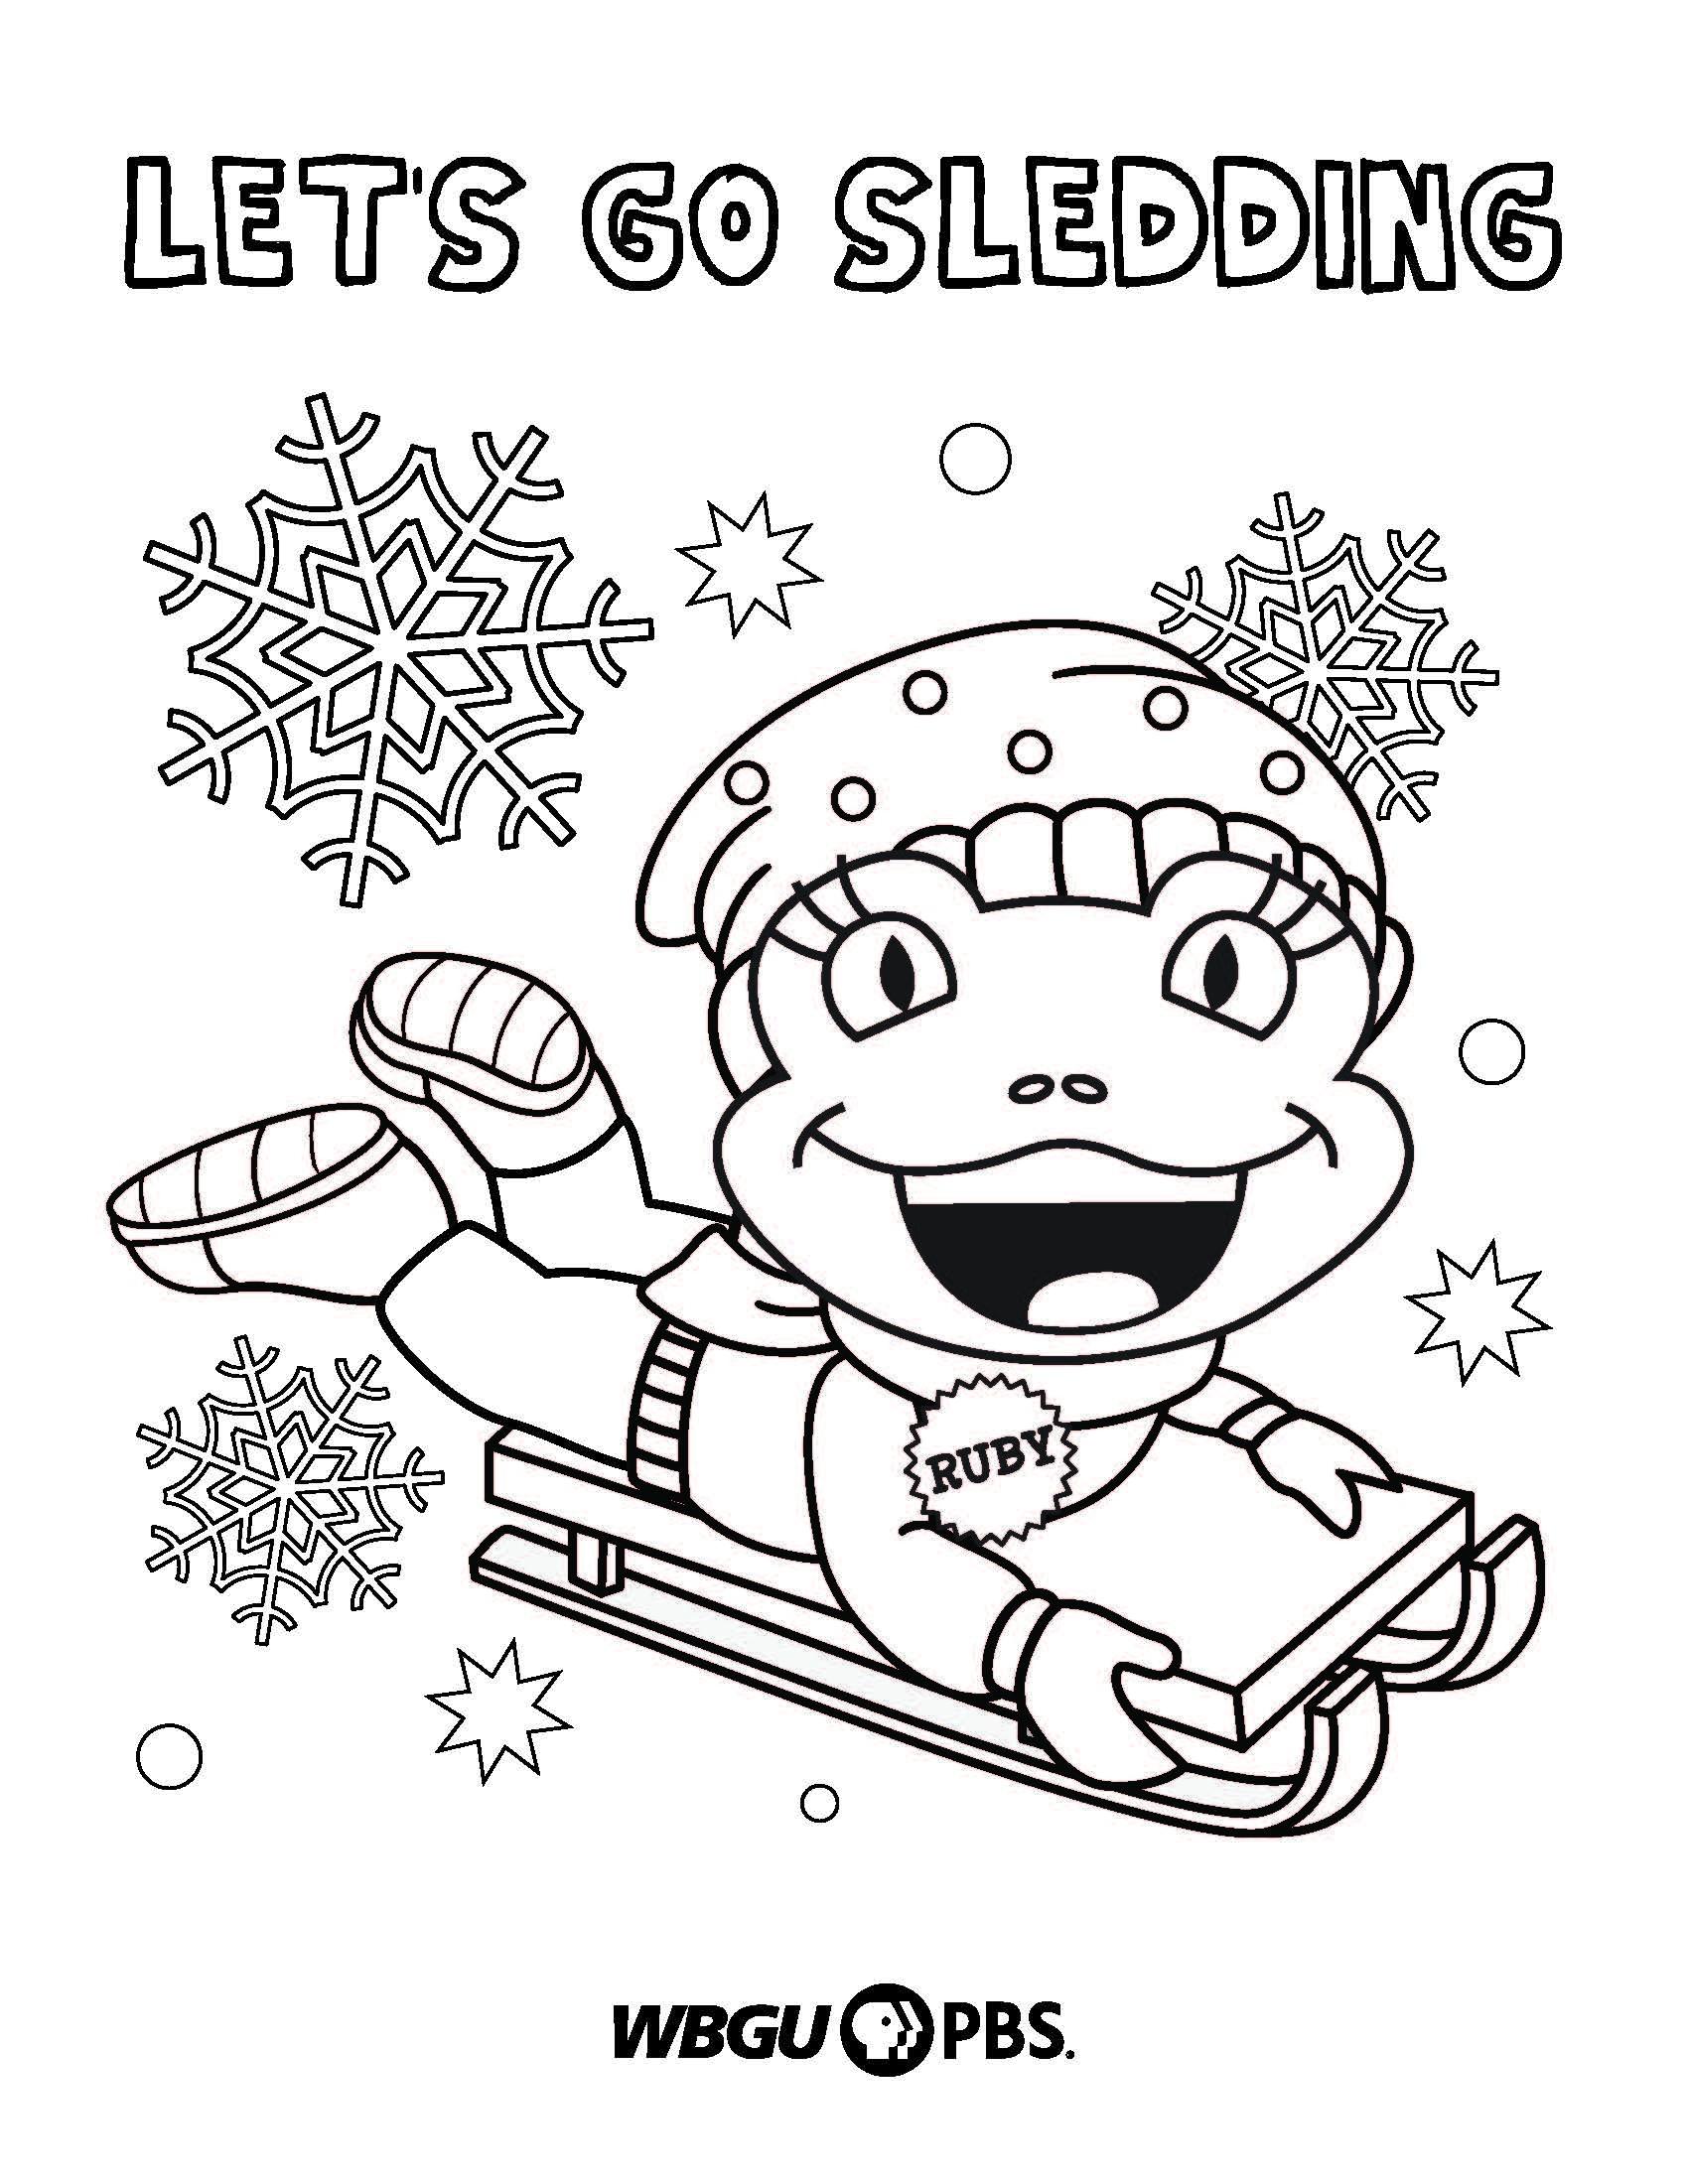 Let's Go Sledding PDF downloadable printout for coloring-sledding